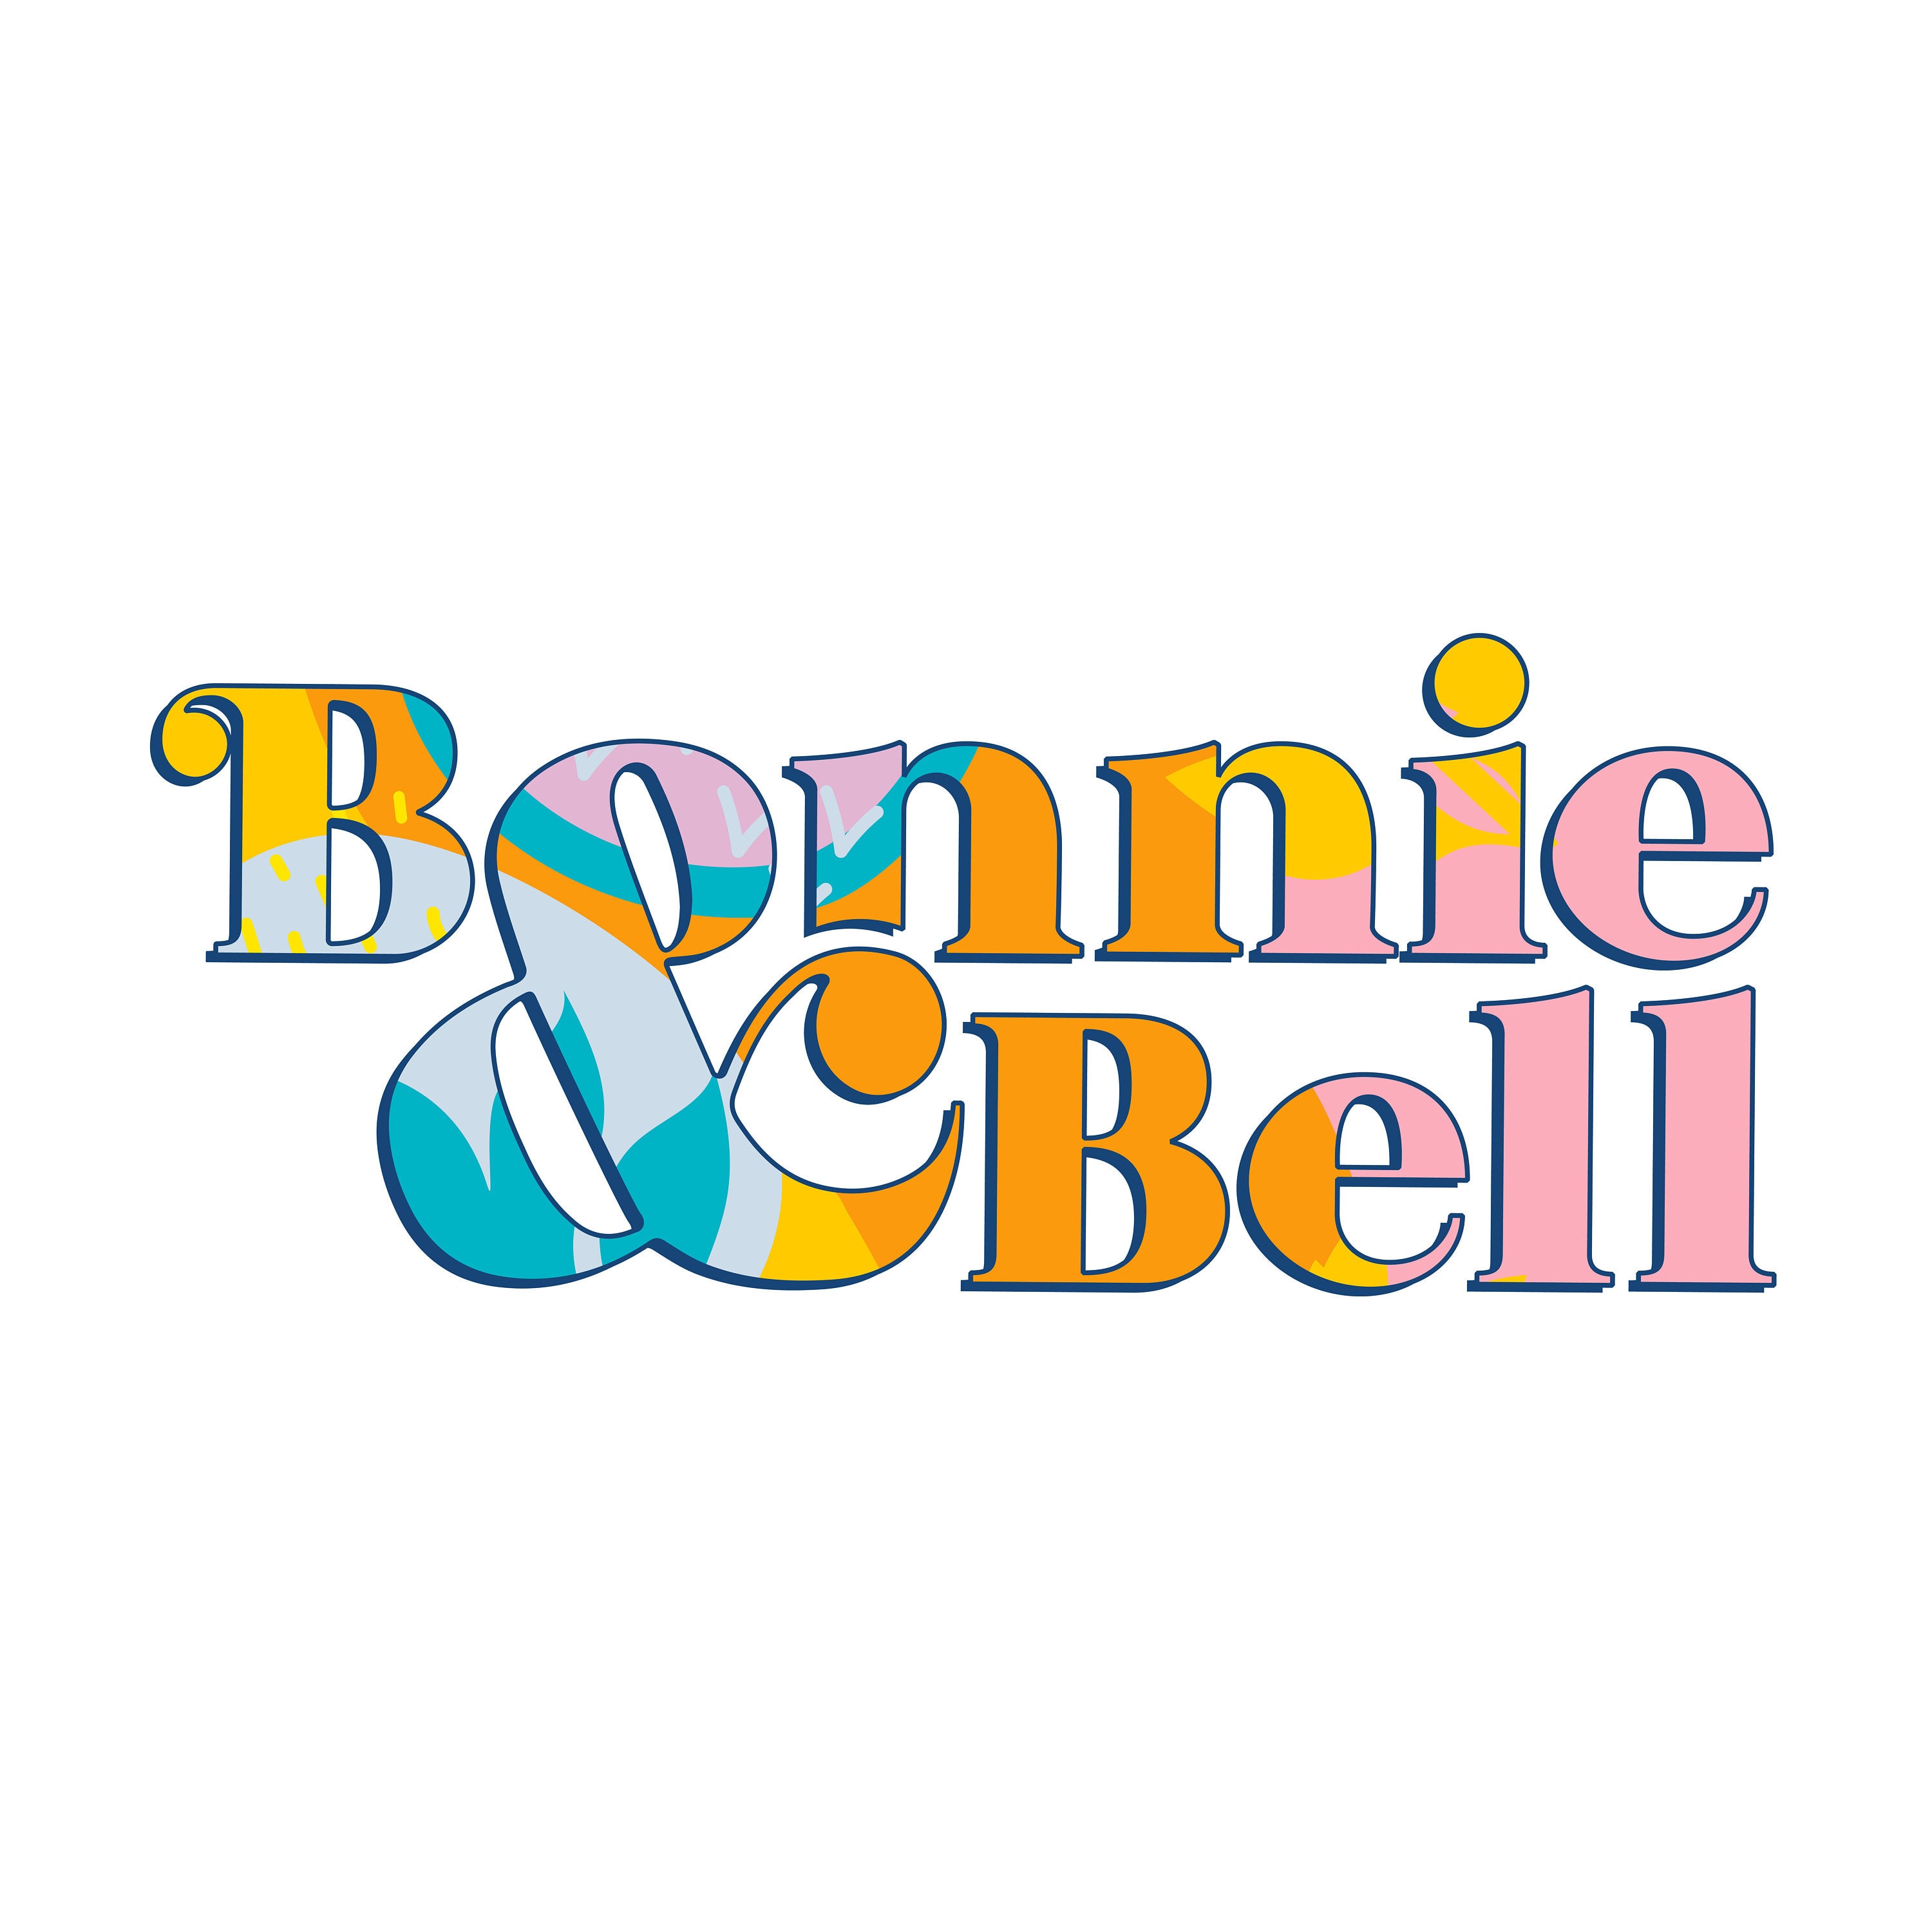 Suncatcher, Rainbow In A Box Crystal Suncatcher By Bonnie and Bell